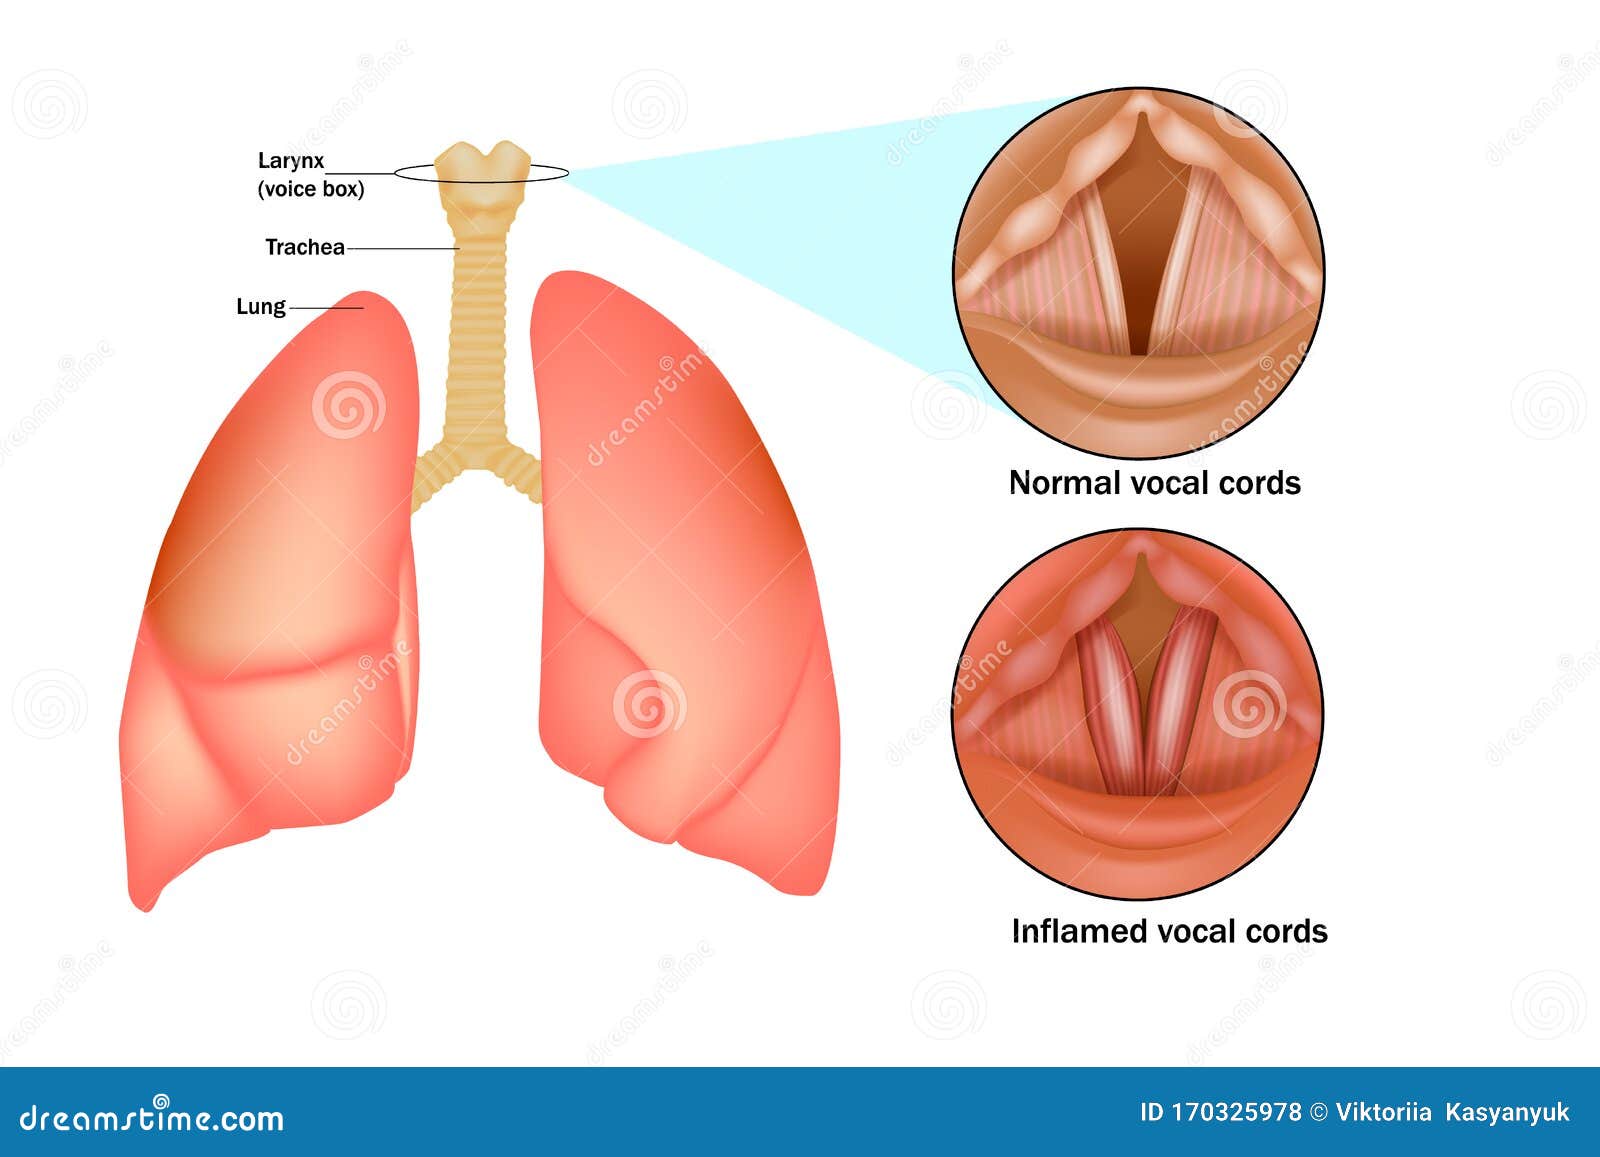 croup laryngo-tracheo-bronchitis.